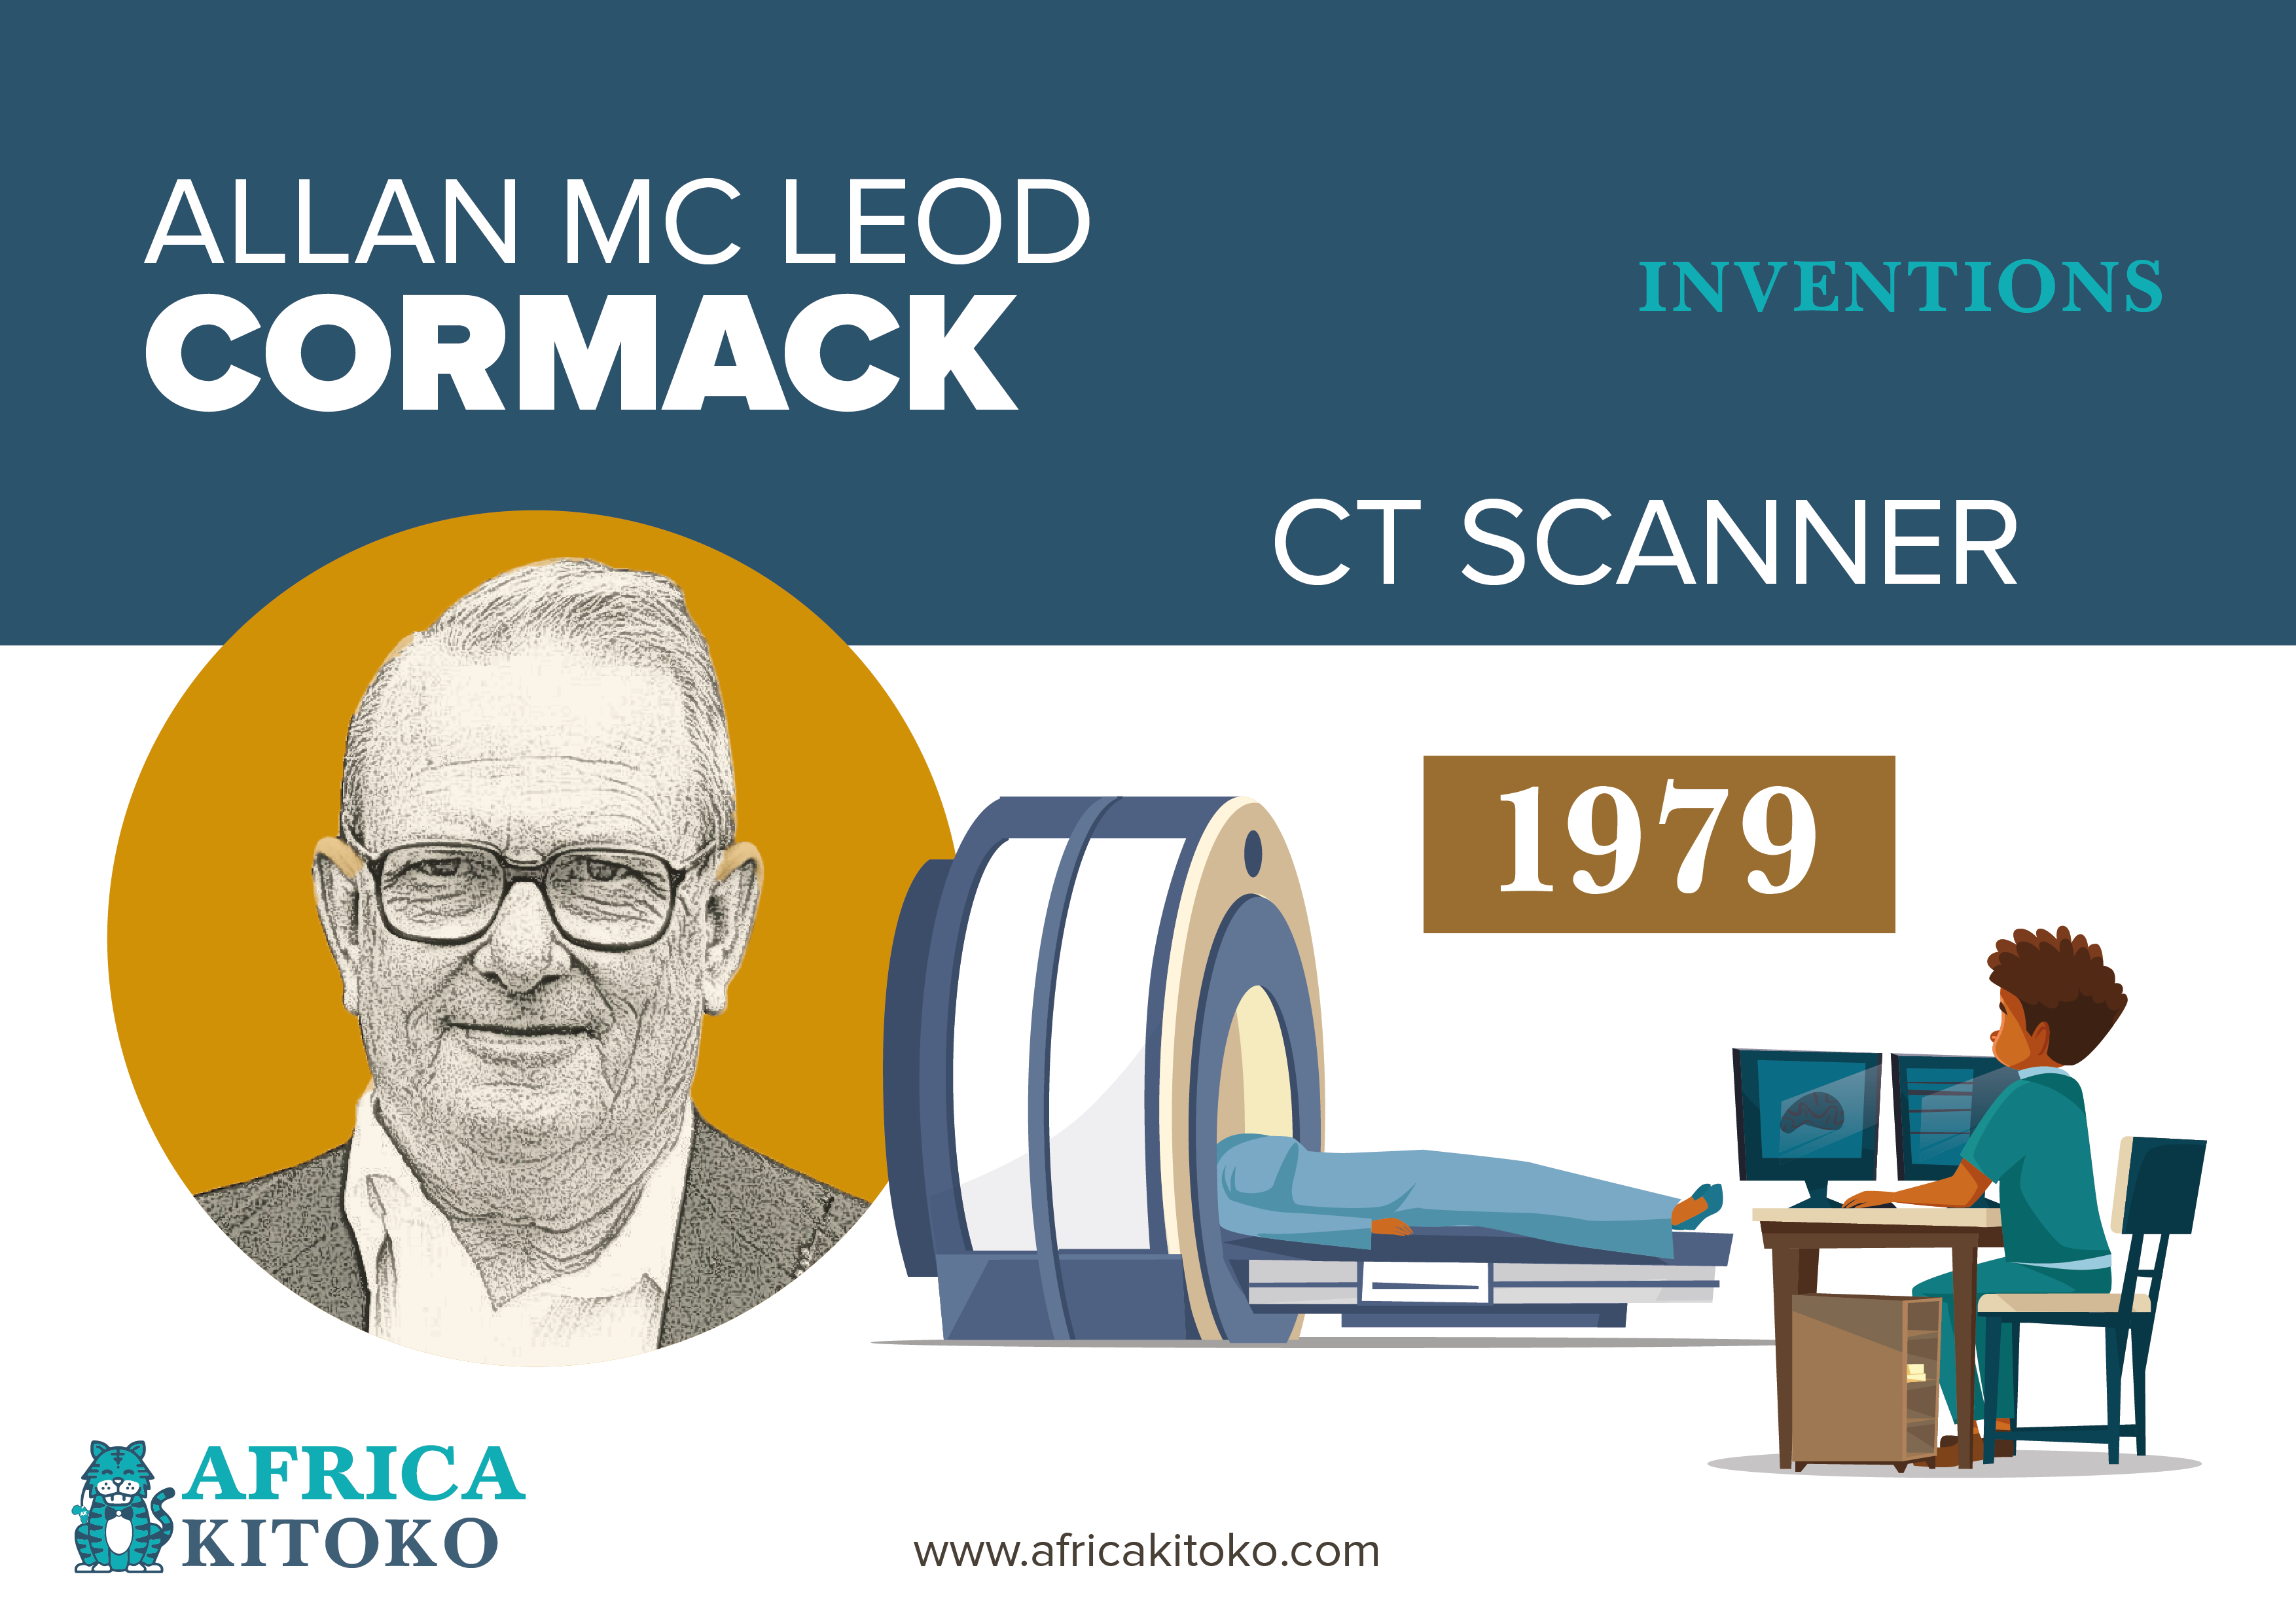 Allan Mc Leod Cormack, inventor of the medical scanner – AFRICA KITOKO